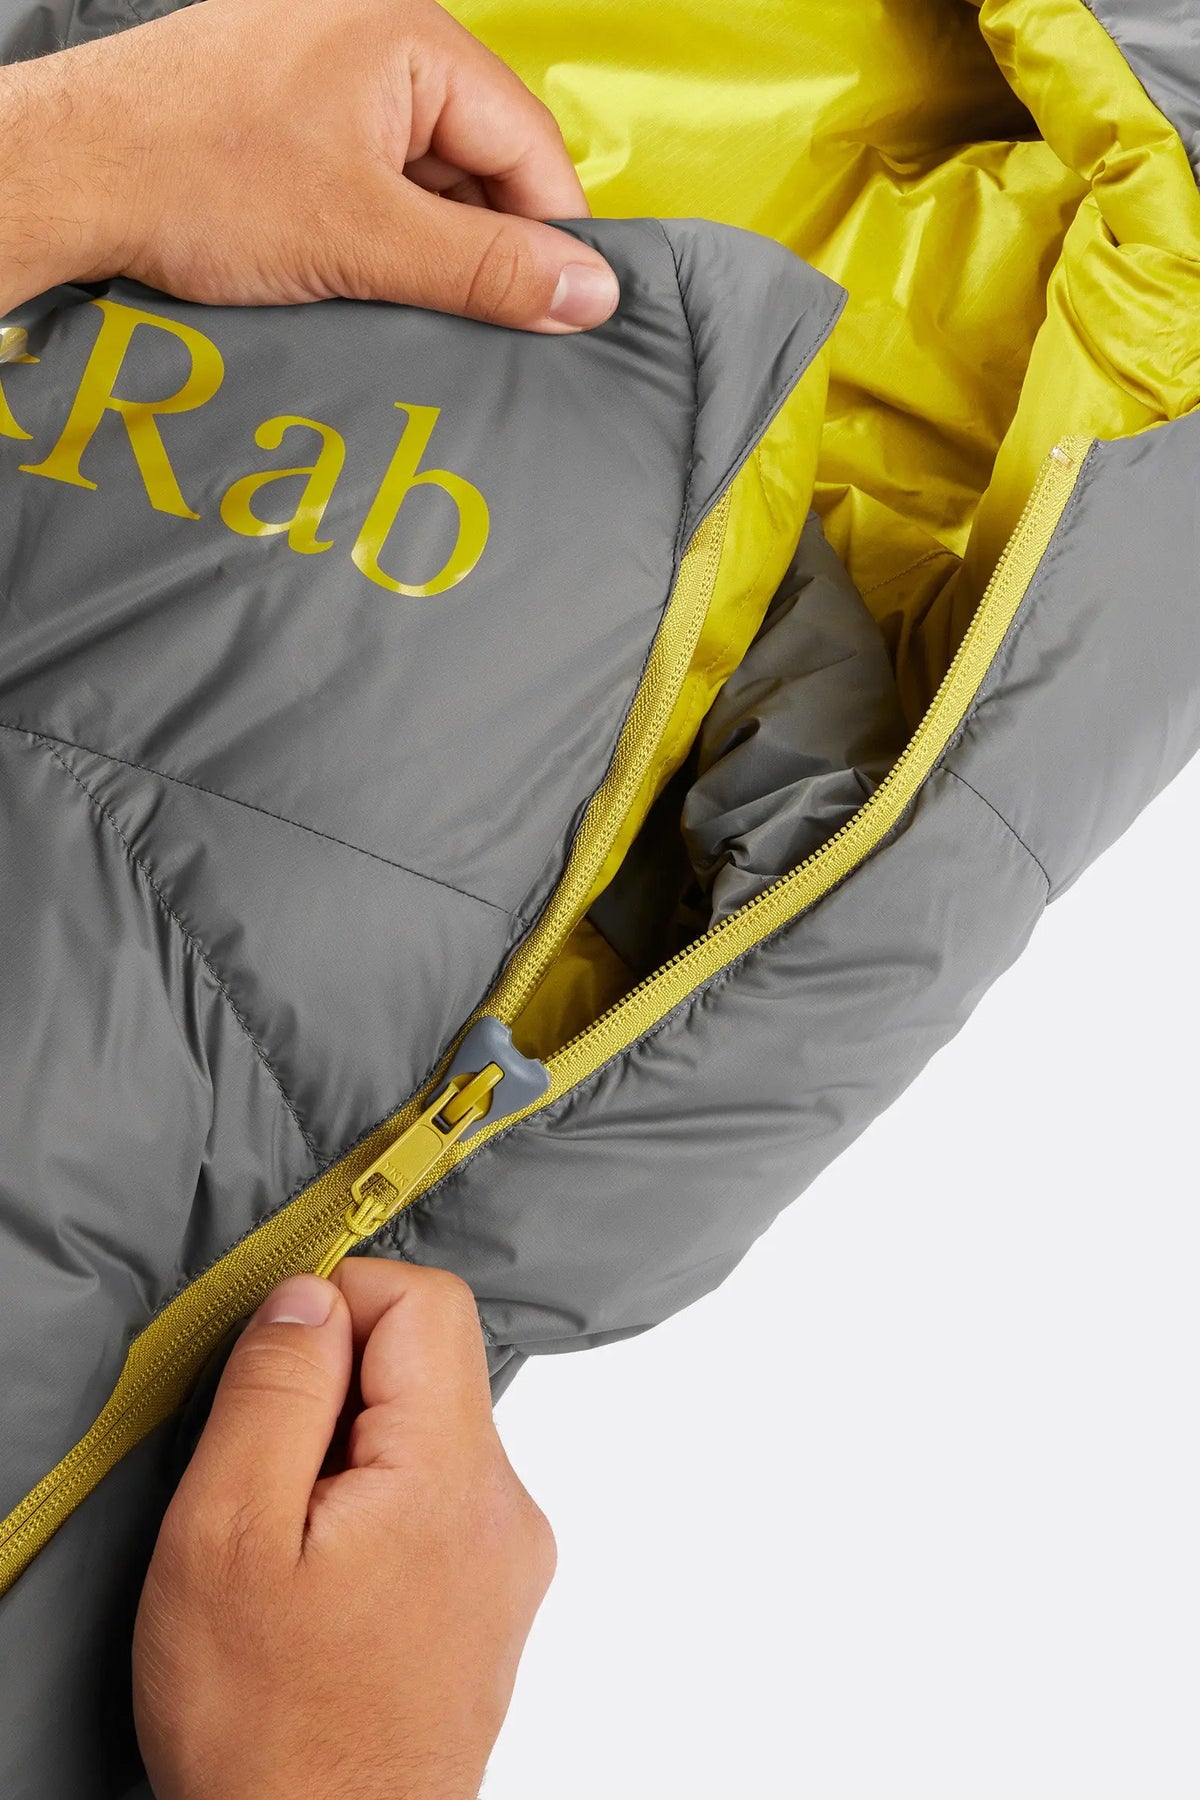 Rab Ascent Pro 400 Down Sleeping Bag (-2c)